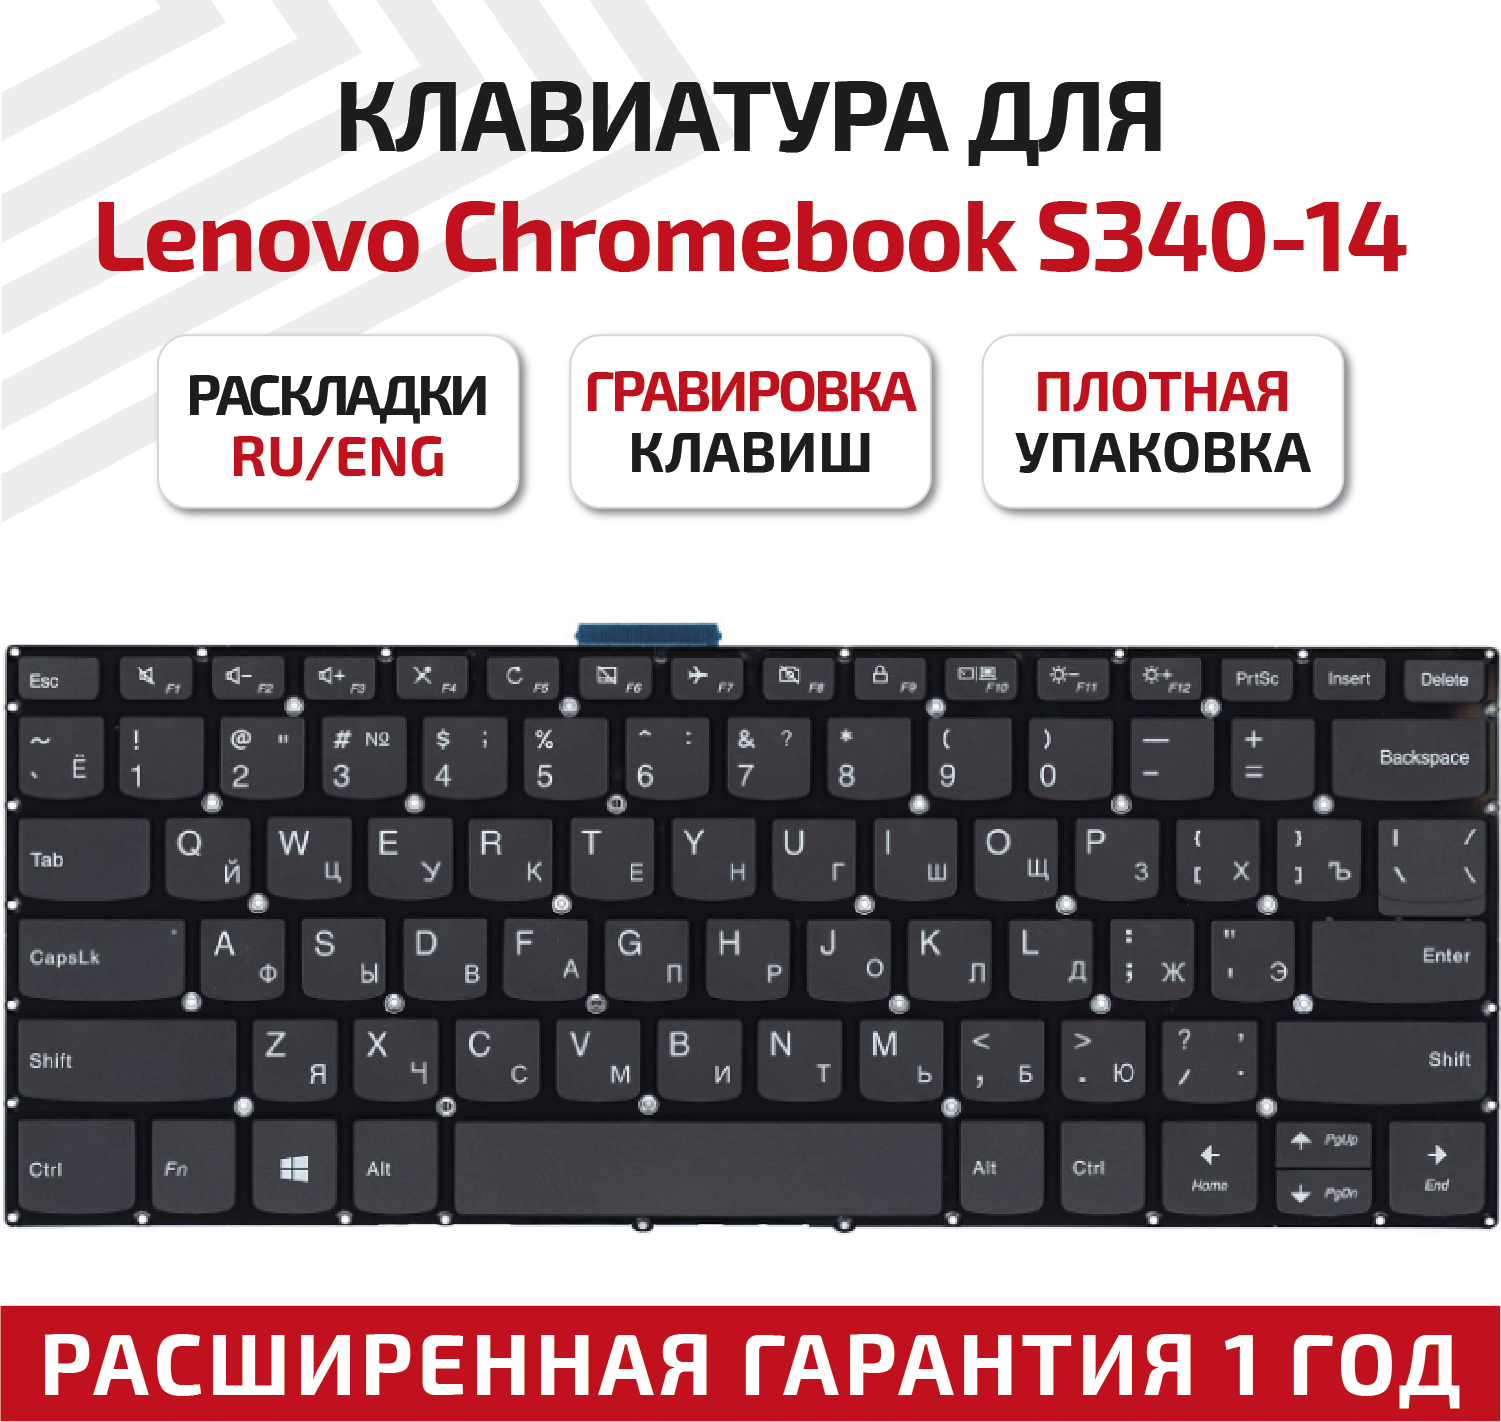 Клавиатура (keyboard) для ноутбука Lenovo ChromeBook S340-14, черная